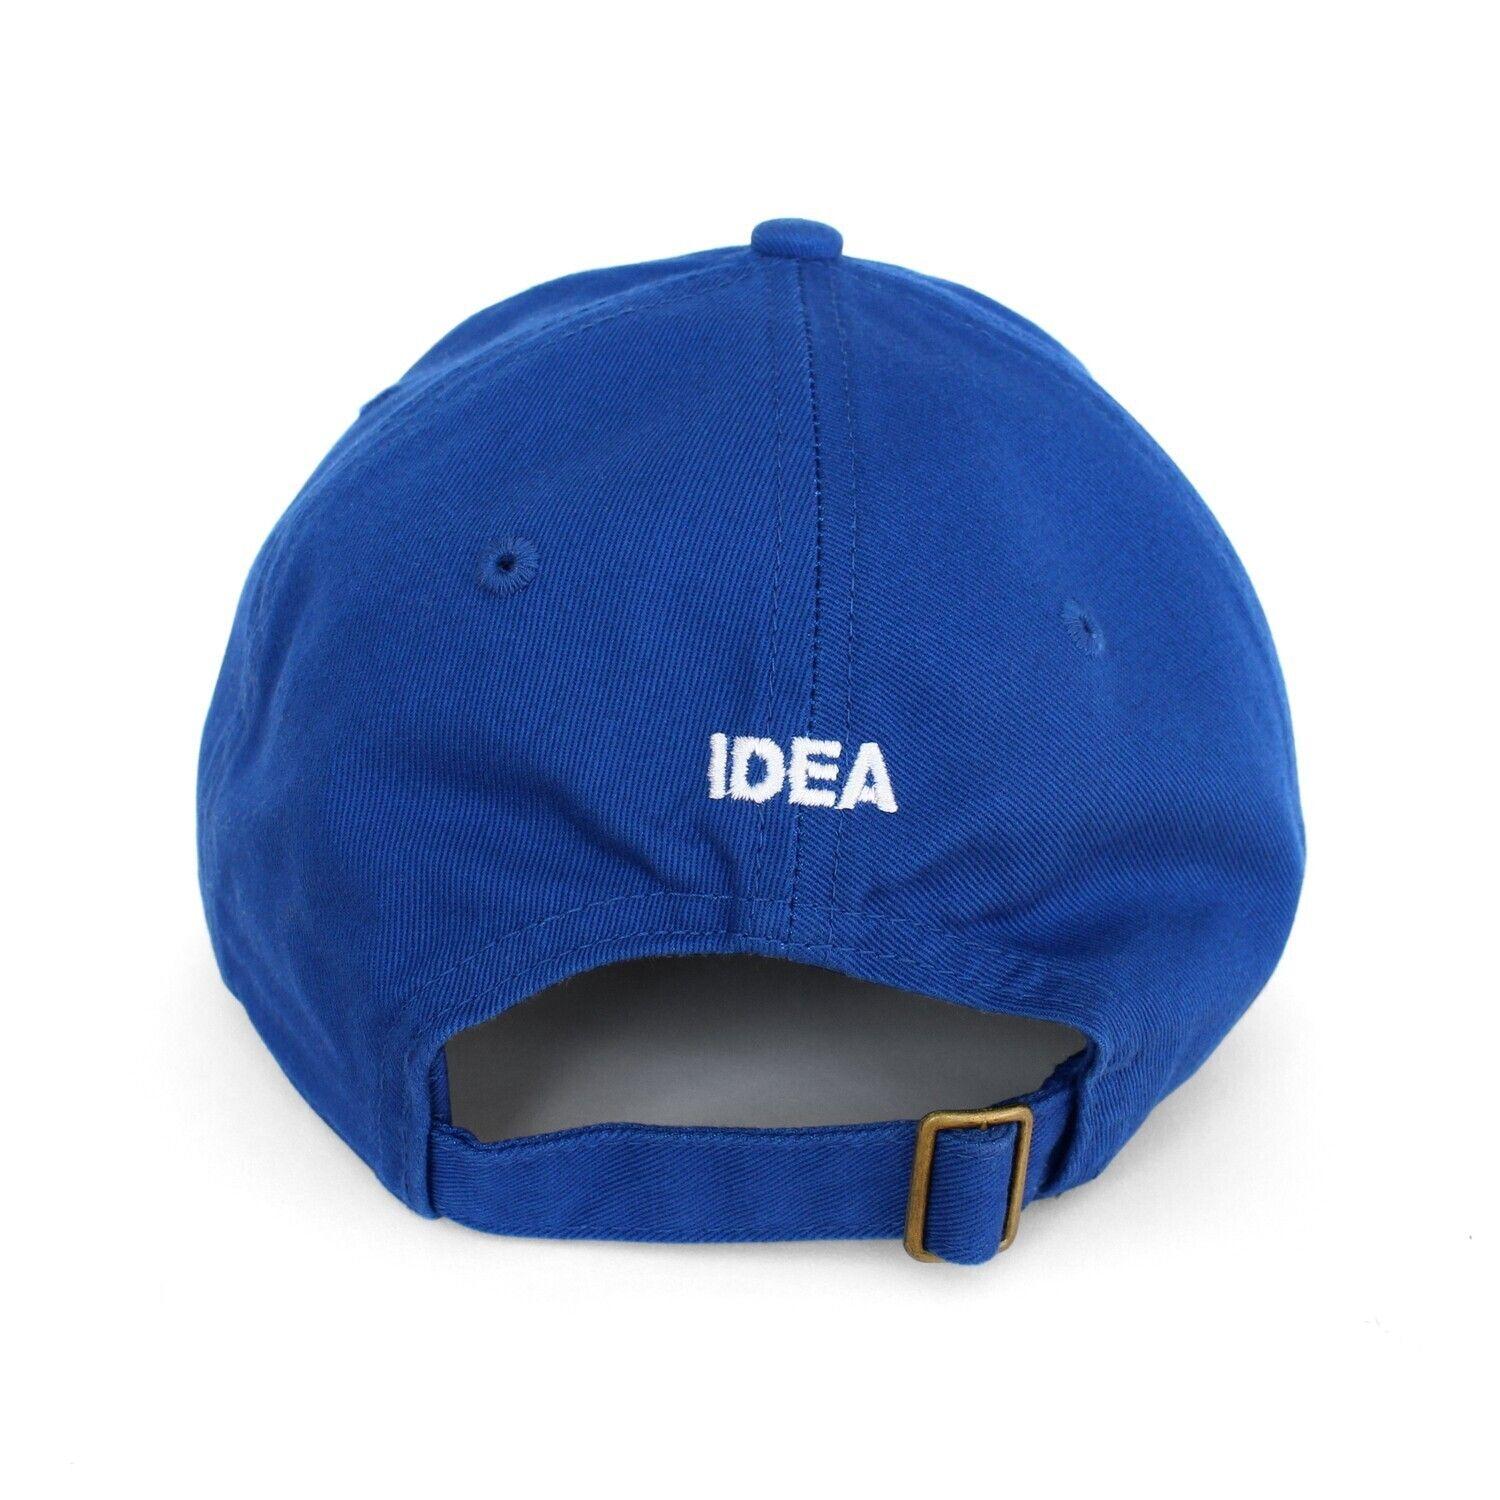 【IDEA】PRIORITY BOARDING HAT キャップ